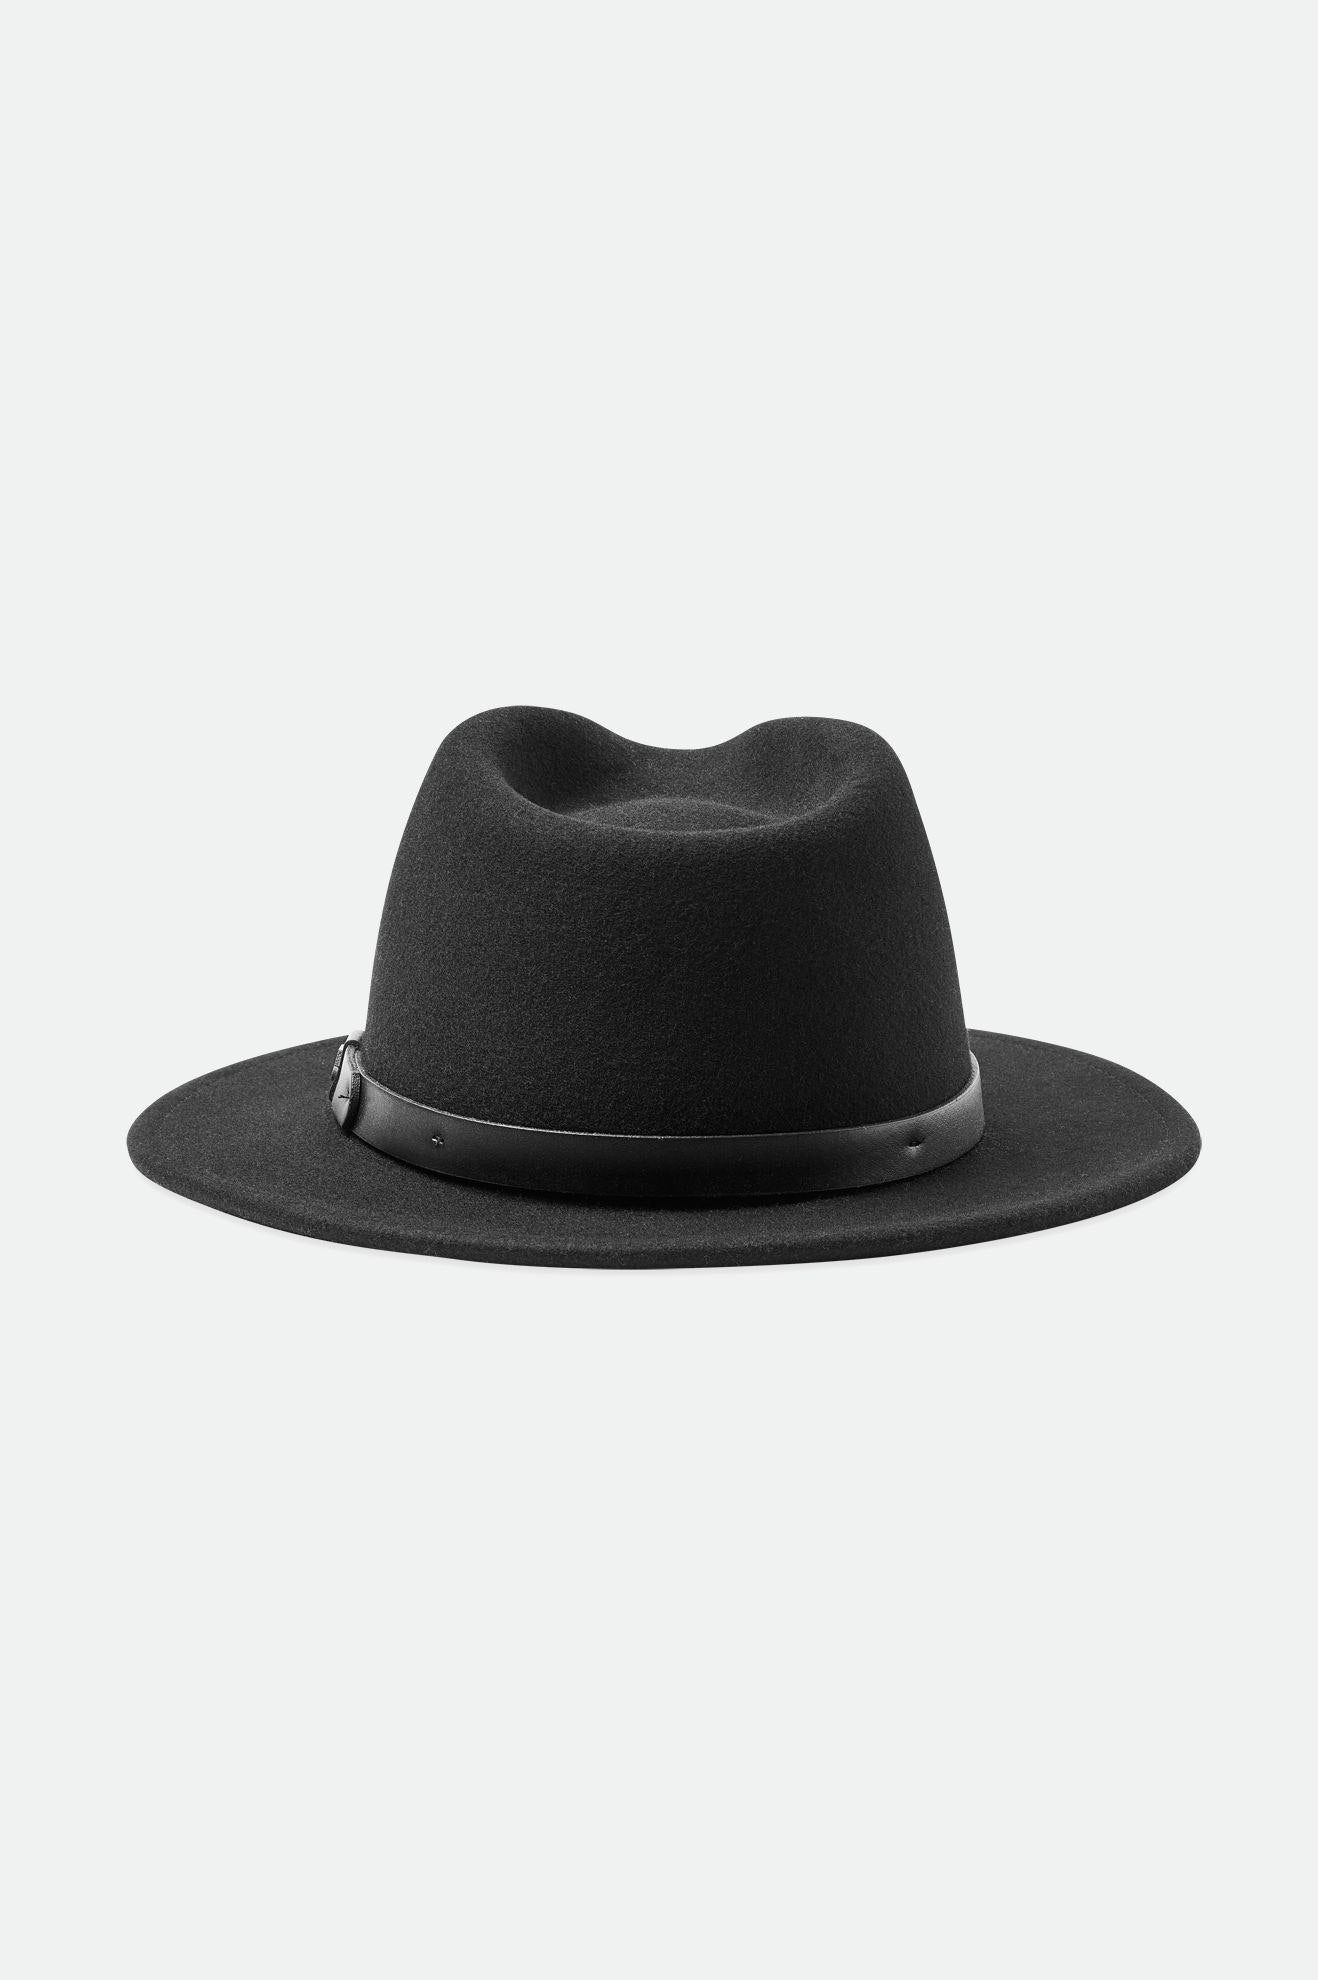 Berets: Monochrome Felt Cowboy Hat With Large Brim For Men And